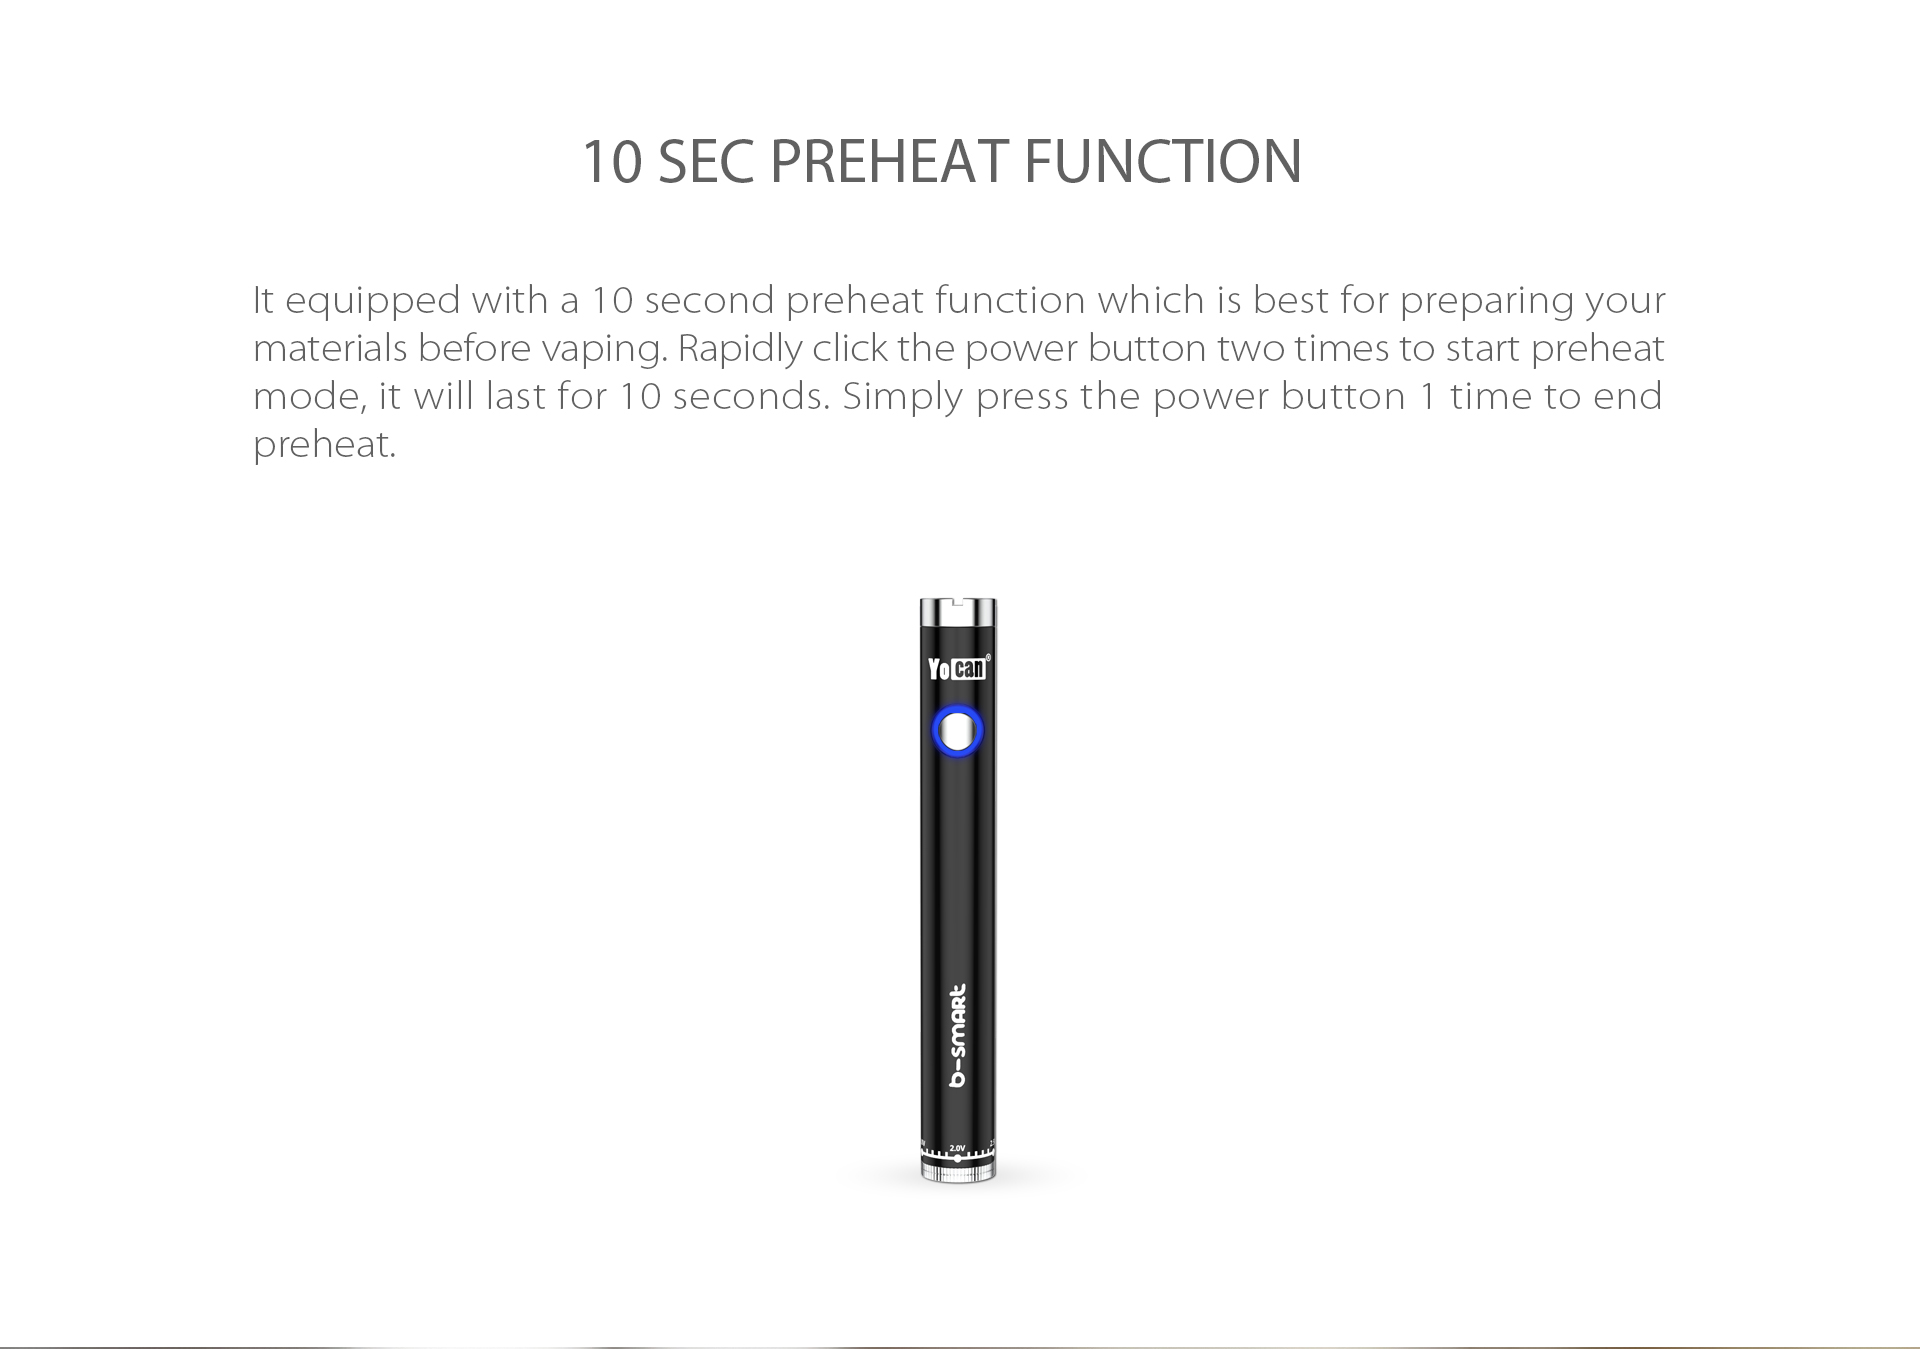 Yocan B-smart Twist VV Slim Vape Pen Battery feature 10 second preheat function.